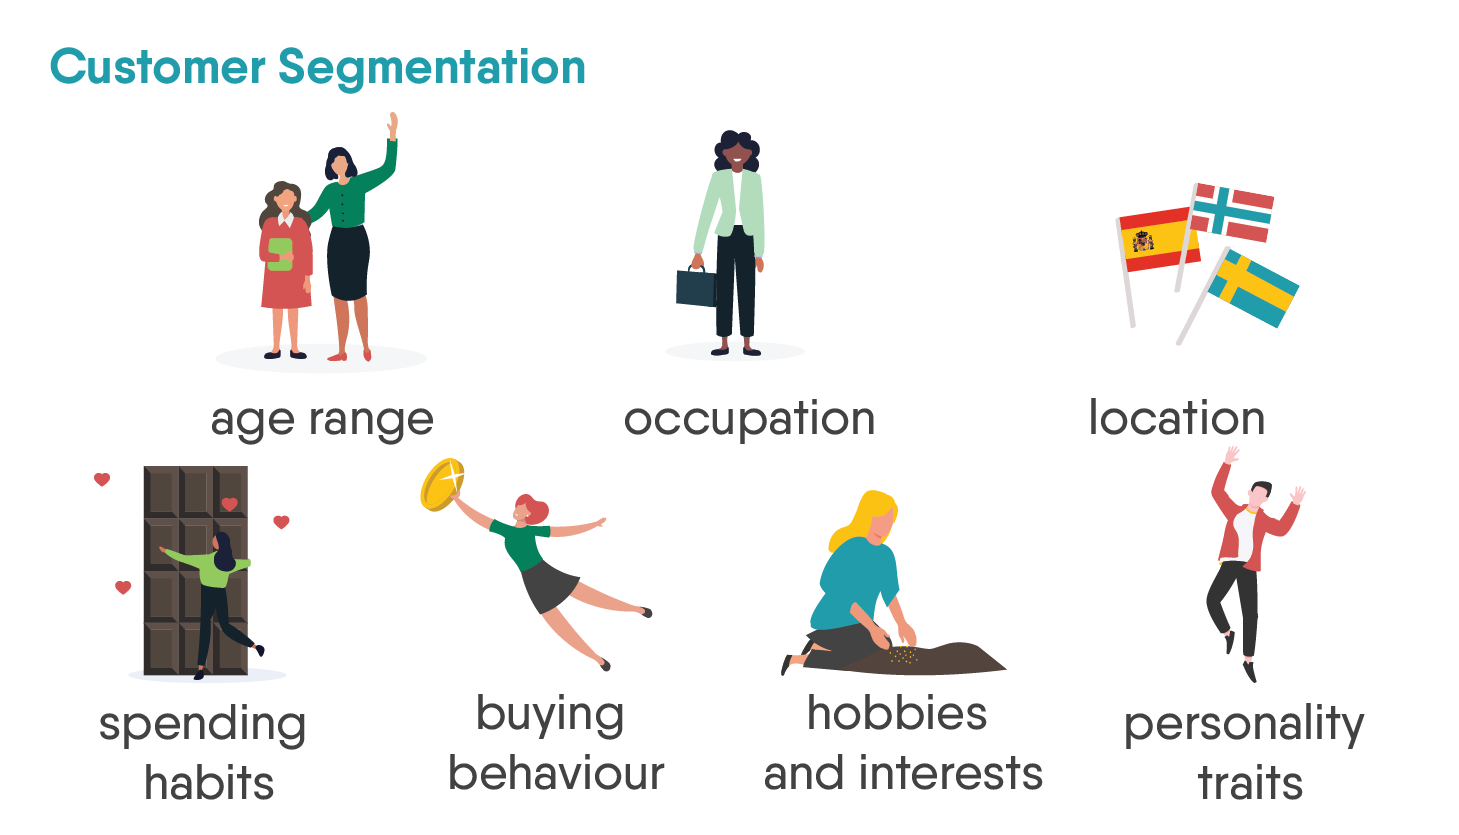 Customer segmentation: age range, occupation, location, spending habits, buying behaviour, hobbies & interests, personality traits.